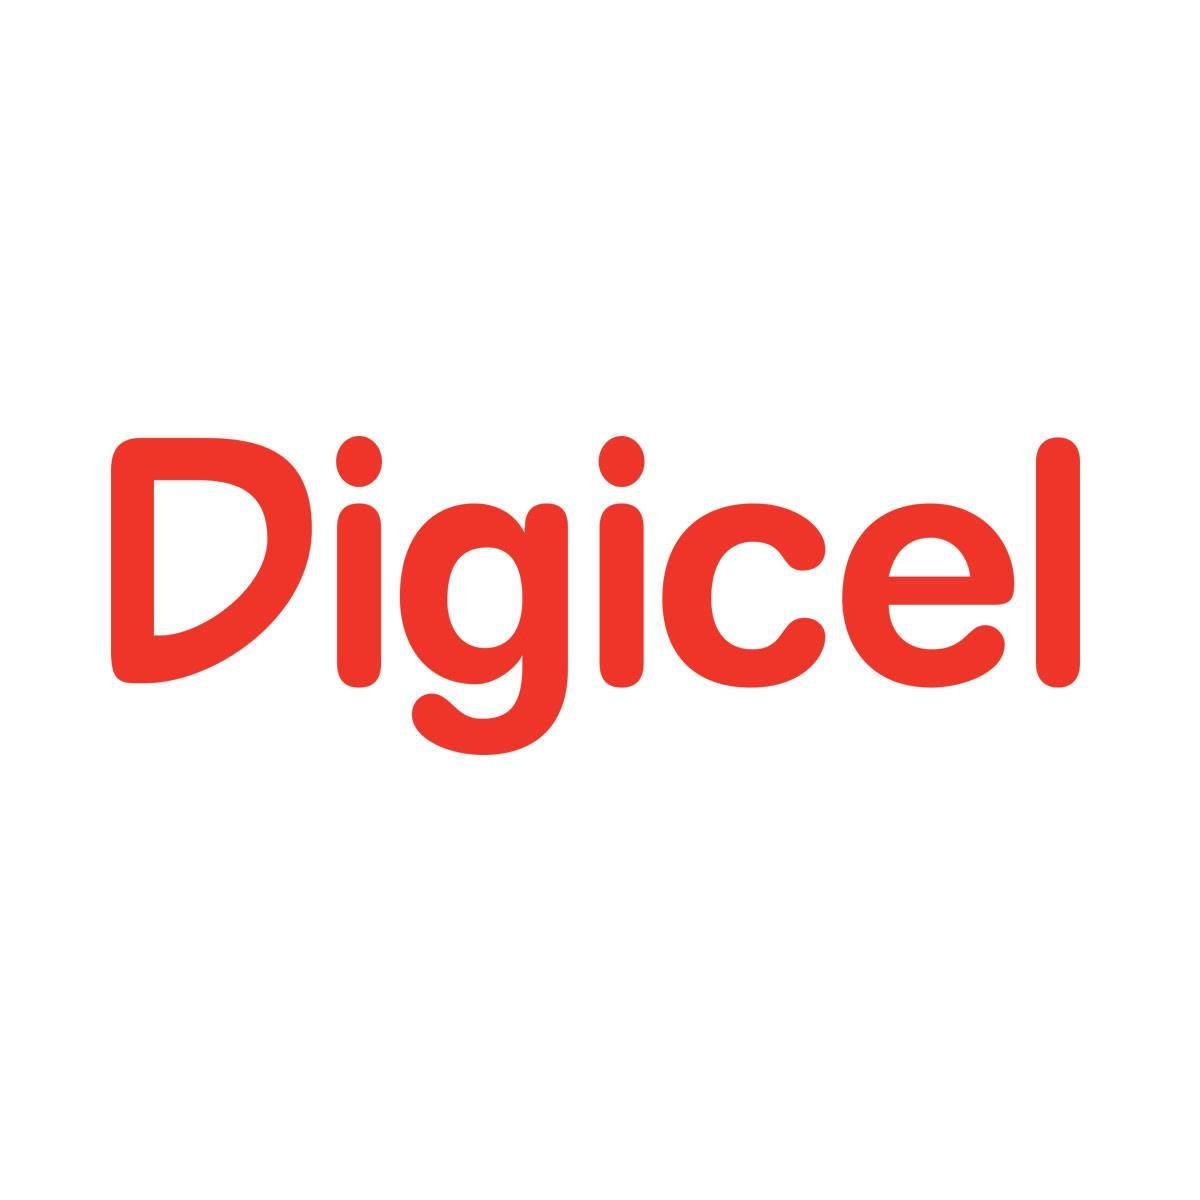 Digicel Customer Care Agent Vacancy April 2021, Digicel Vacancy March 2021, Machine Operator Digicel Group, Digicel Vacancy February 2021, Digicel Vacancy January 2021, Digicel Telesales Agent Vacancy, Digicel Vacancies December 2020, Digicel Vacancy December 2020, Temporary Vacancy Digicel, Digicel Sales Associate Vacancy, Digicel Vacancies November 2020, Digicel Vacancies November 2020, Digicel Trinidad Vacancies October 2020, Digicel Graphic and Multimedia Designer, Digicel Experience Store Associate Vacancy, Digicel Vacancies September 2020, Digicel Customer Care Agent Vacancy, Digicel Vacancy August 2020,Digicel Vacancy July 2020